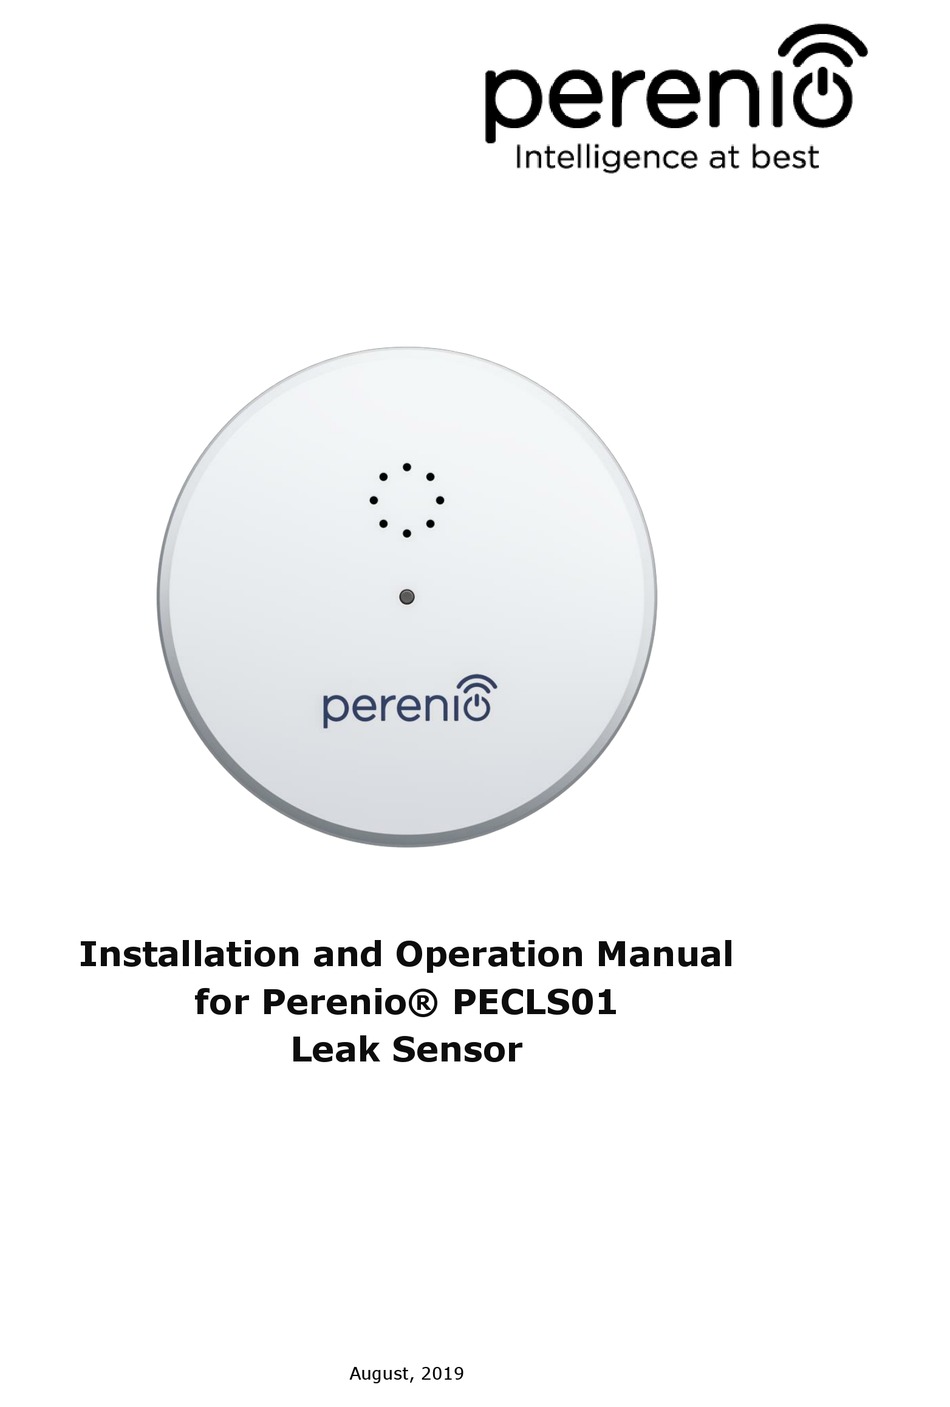 PERENIO PECLS01 INSTALLATION AND OPERATION MANUAL Pdf Download | ManualsLib